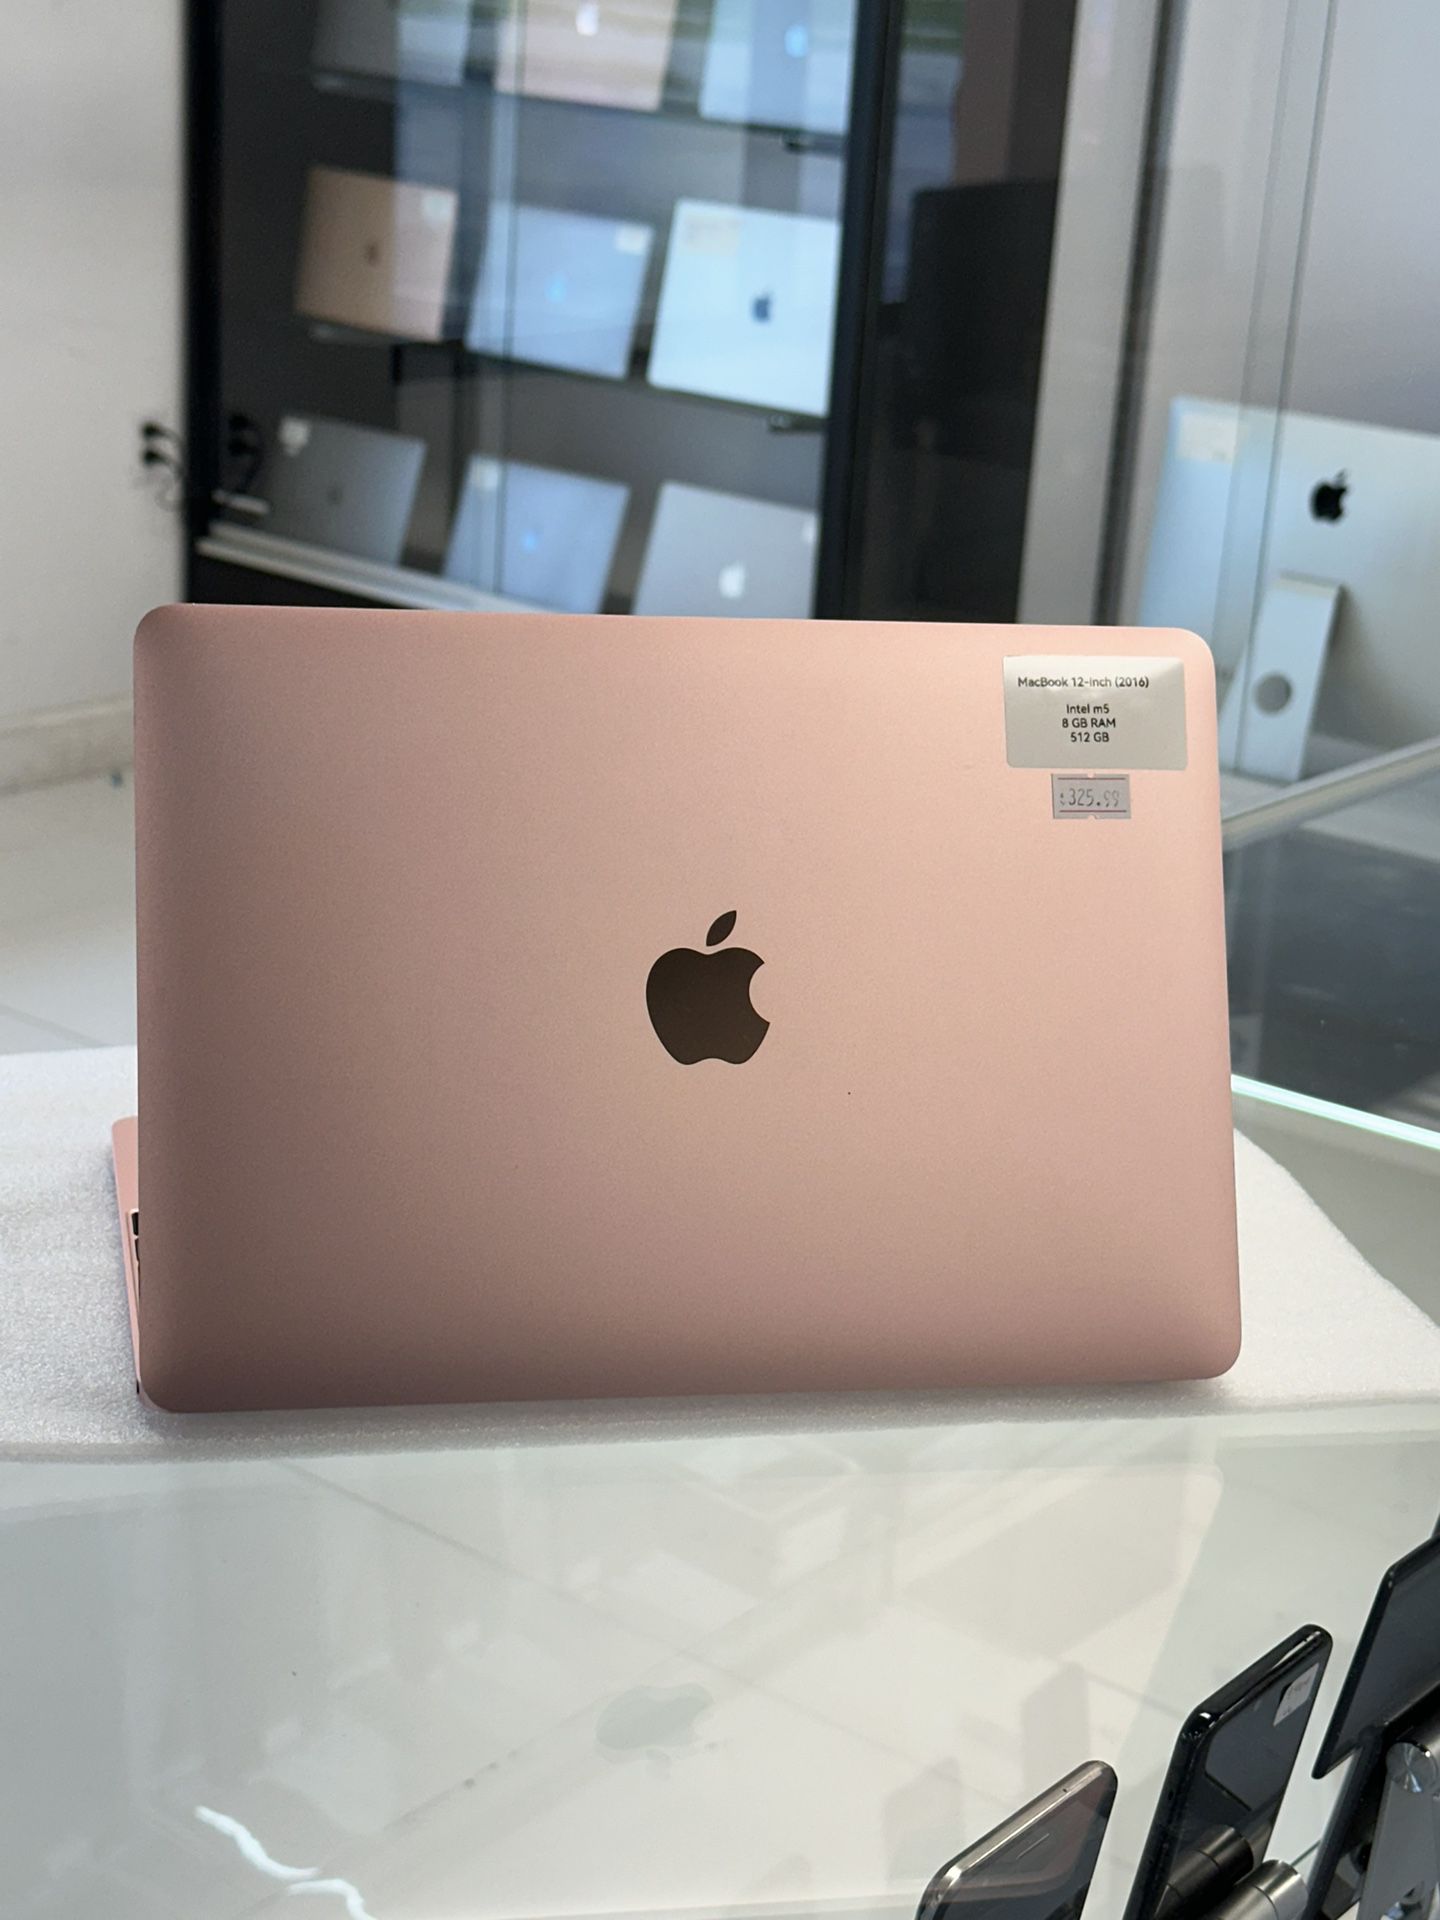 MacBook 12-inch  512 GB  1 Year Warranty 